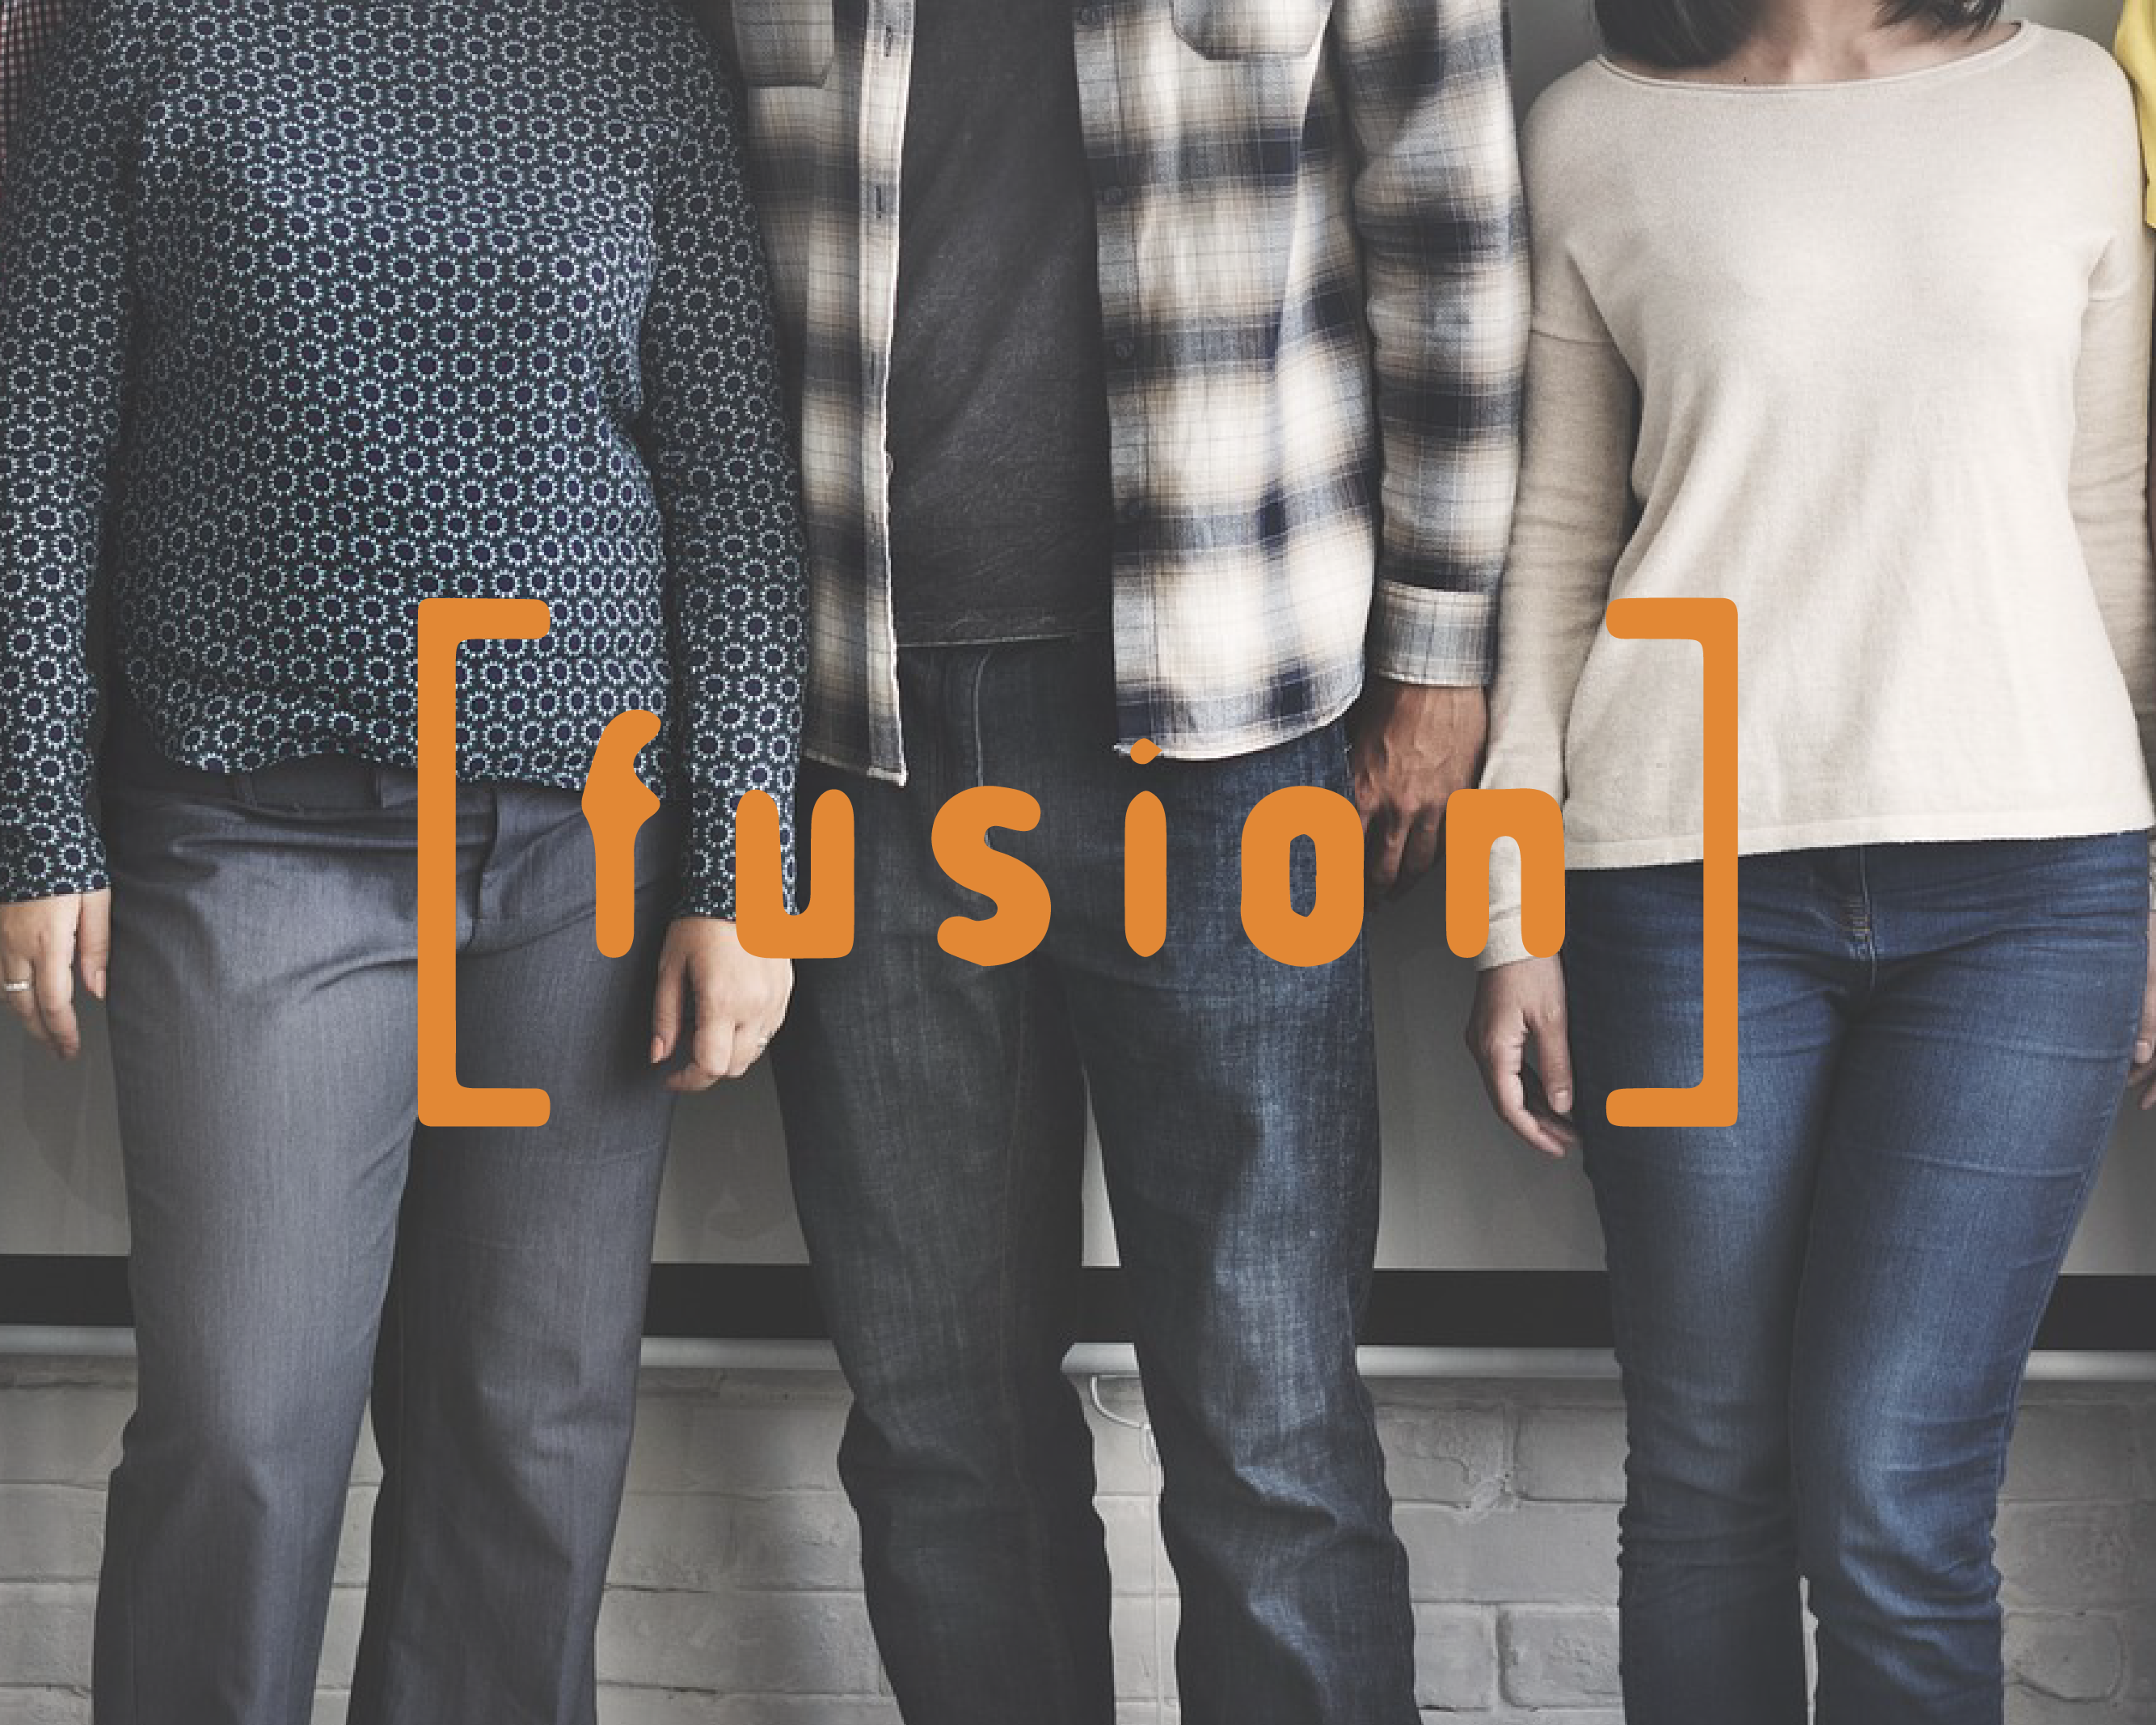 Fusion – Evangelism (Part 1)